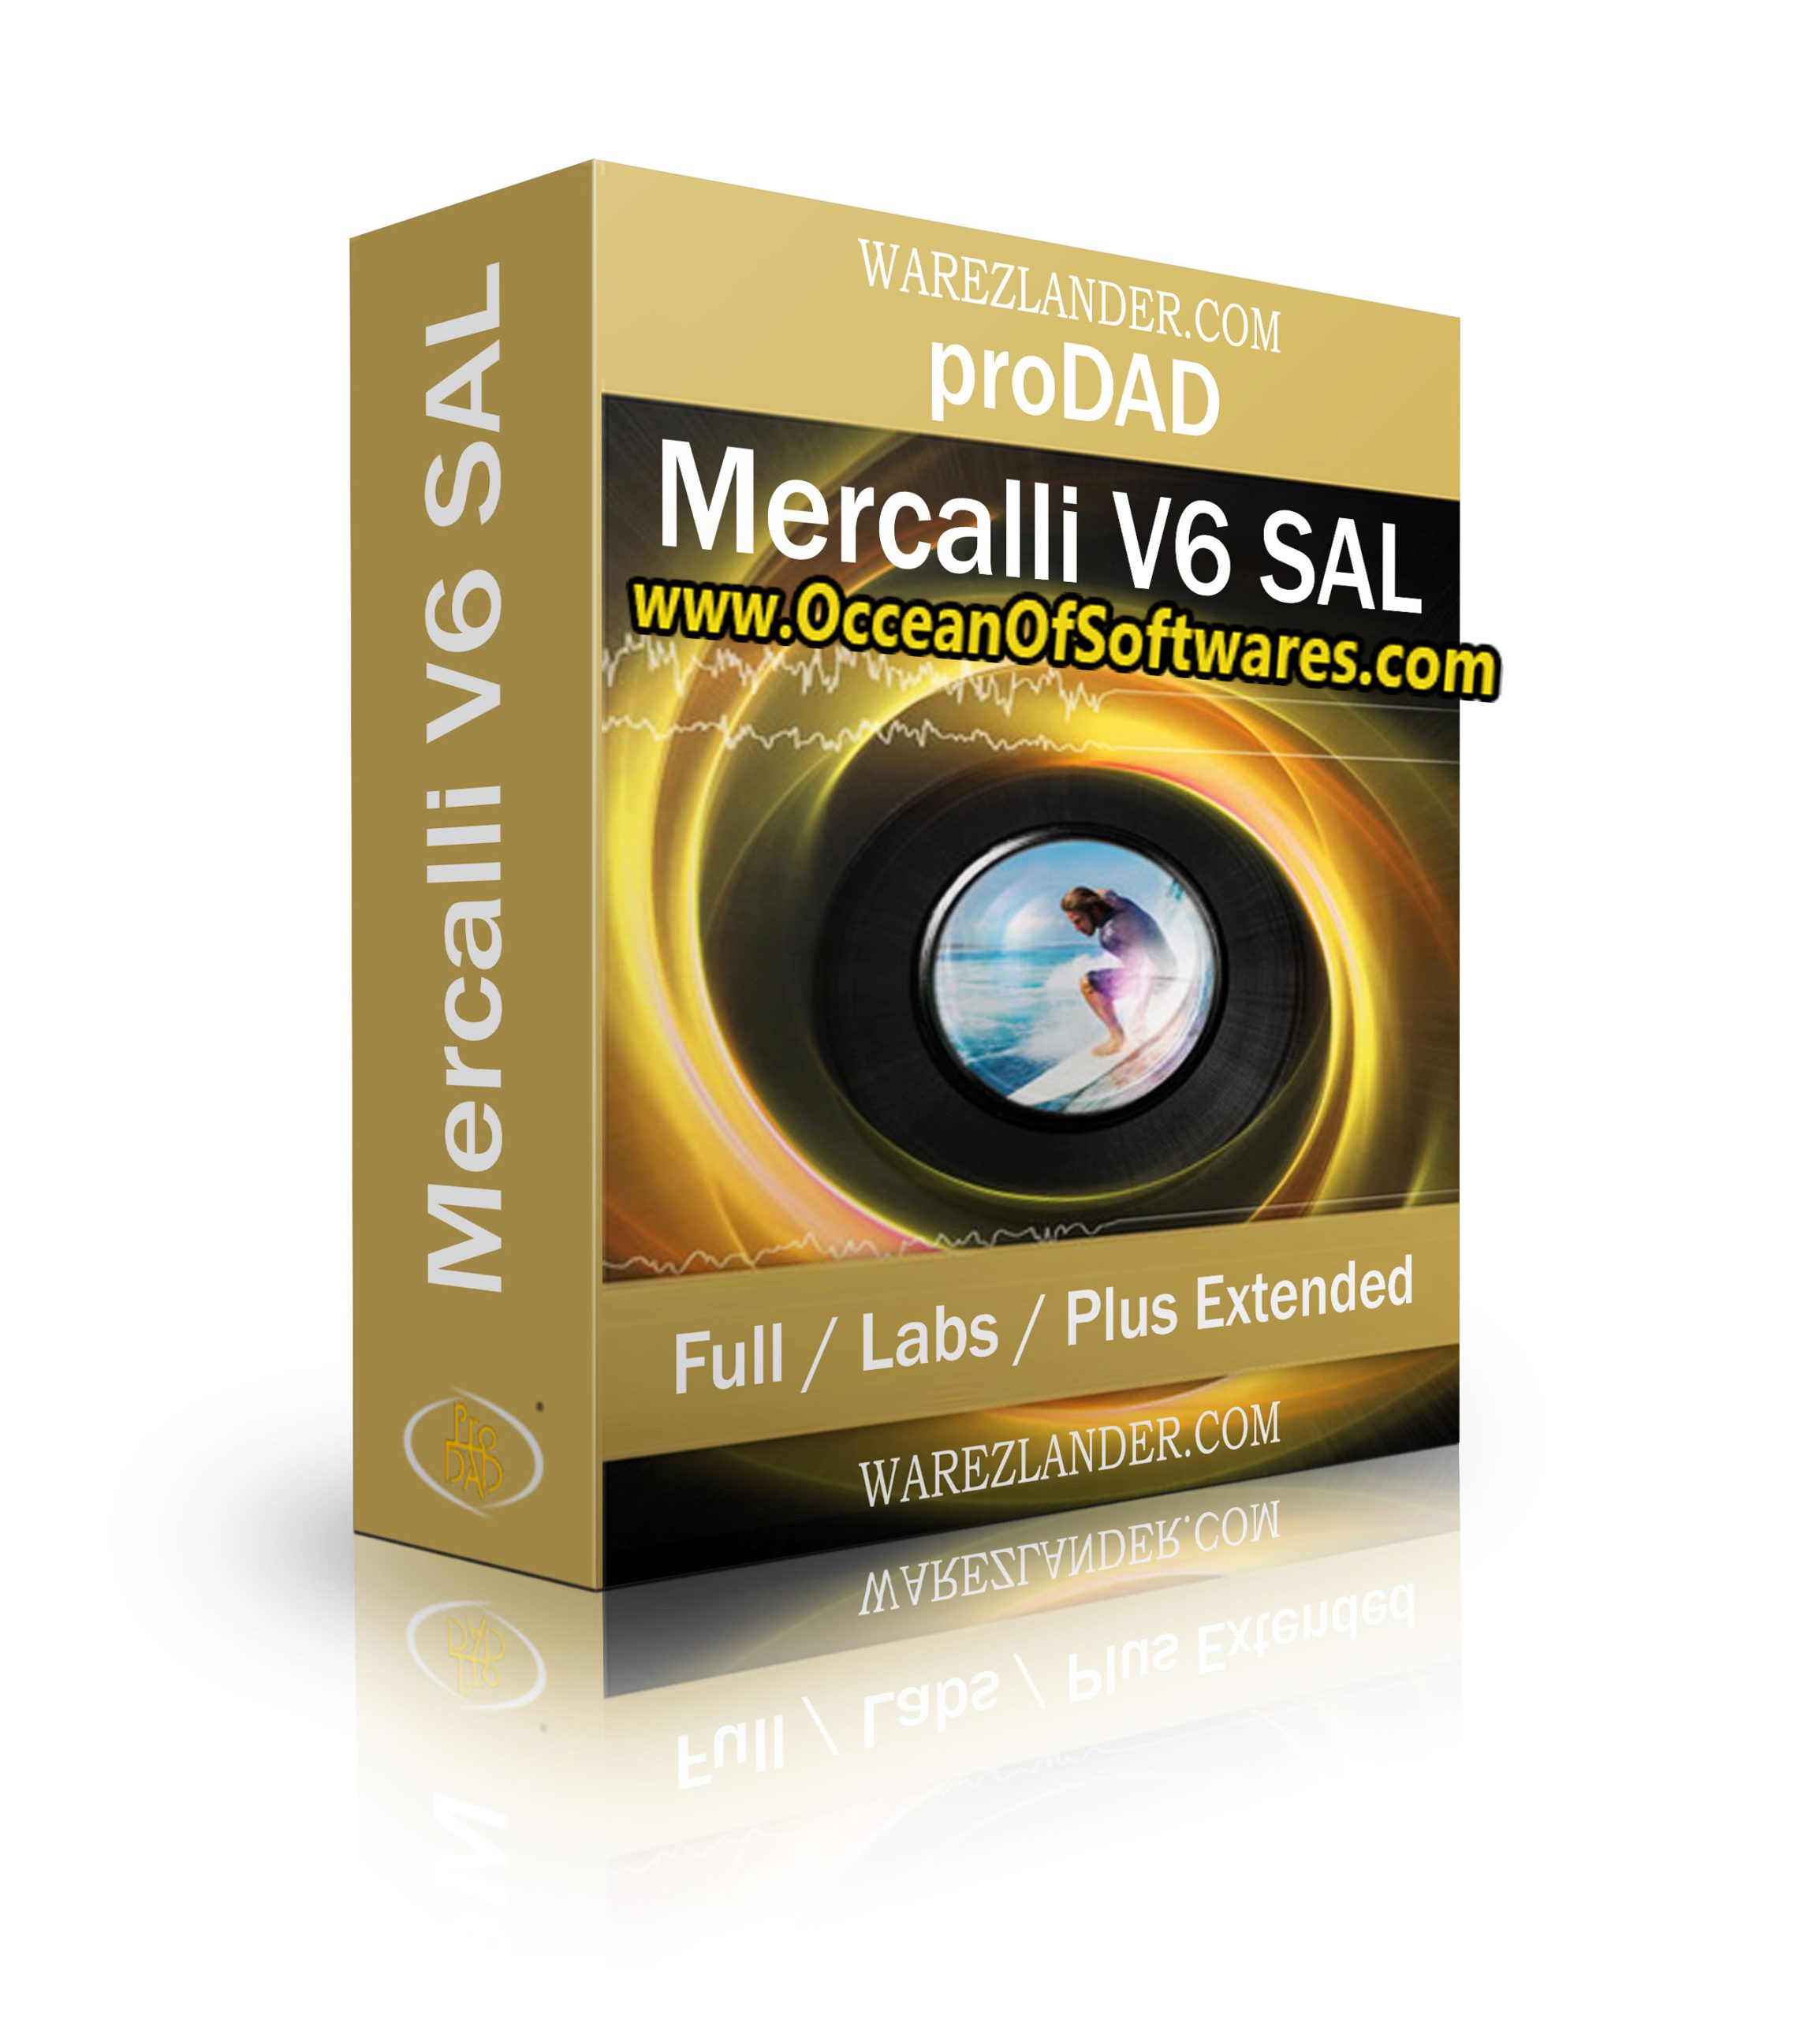 proDAD Mercalli V6 SAL 6.0 Free Download